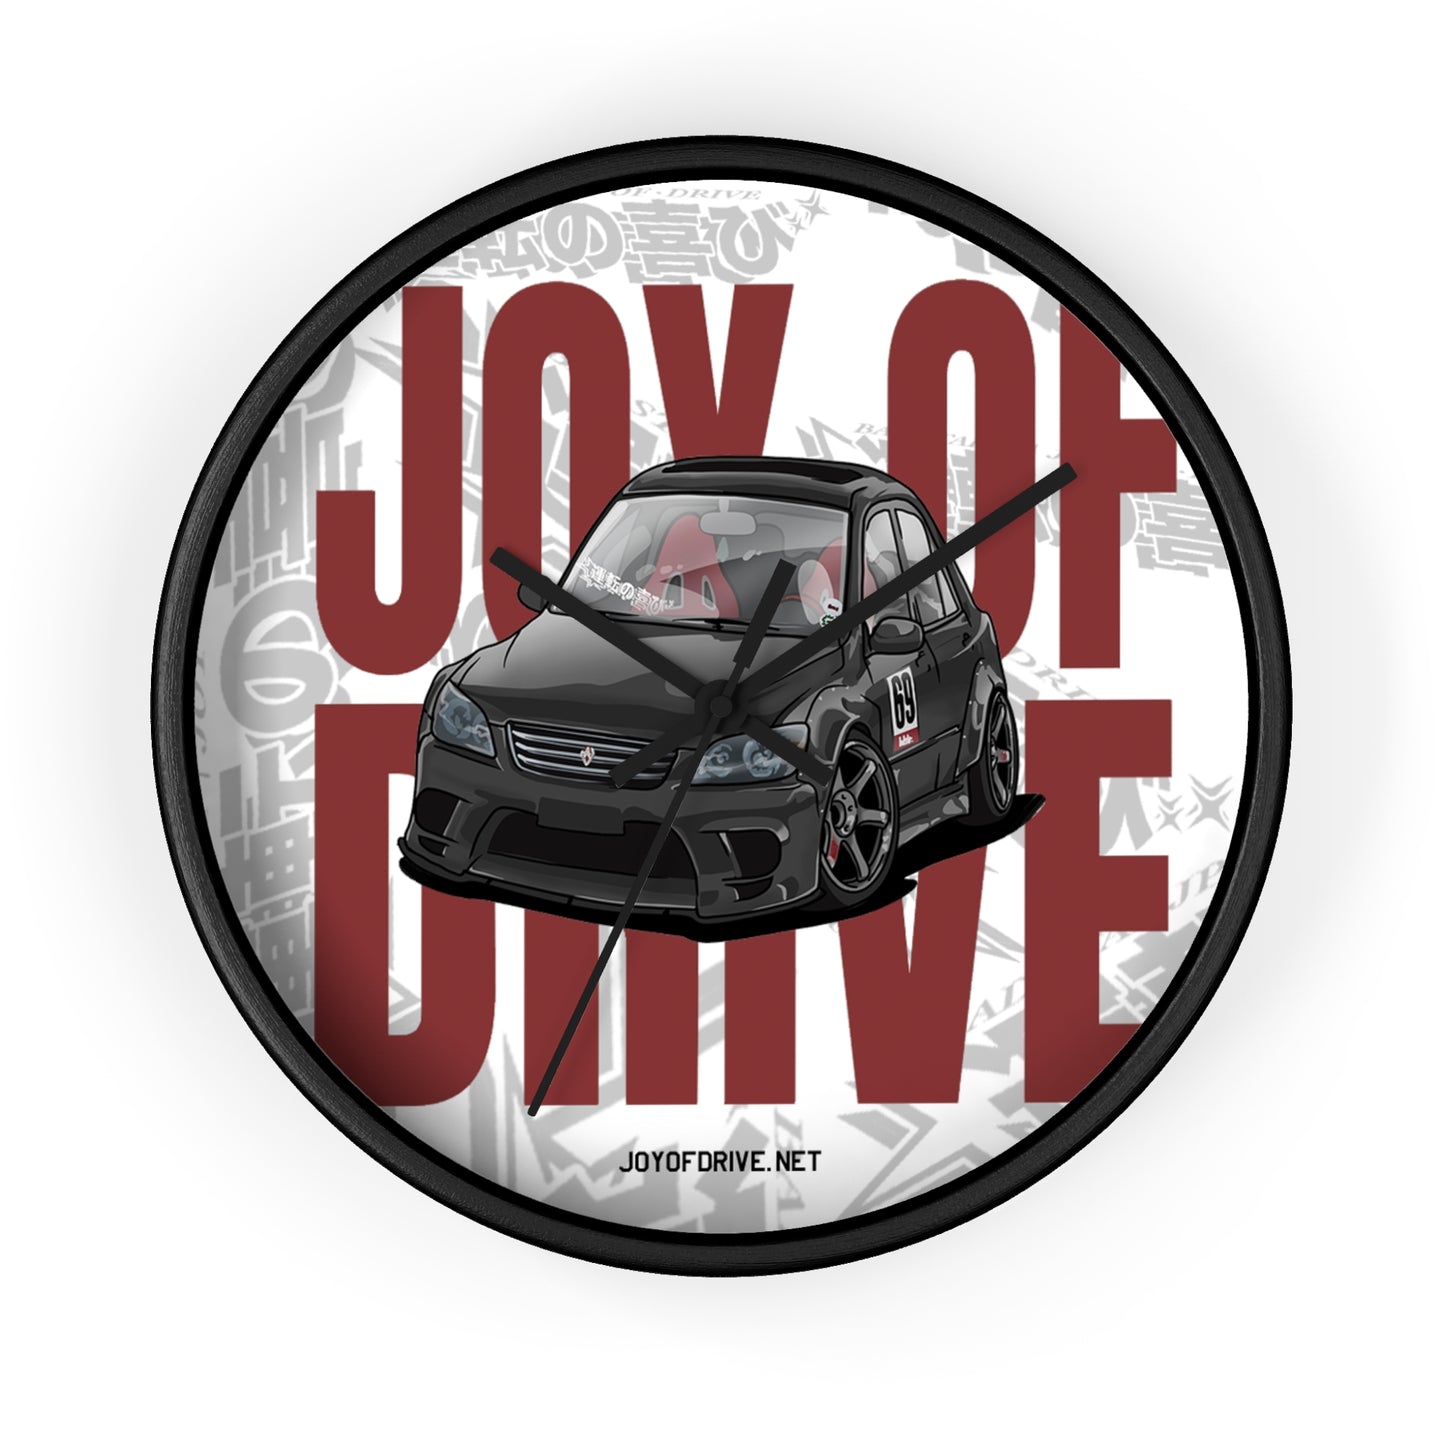 Joy Of Drive Clock